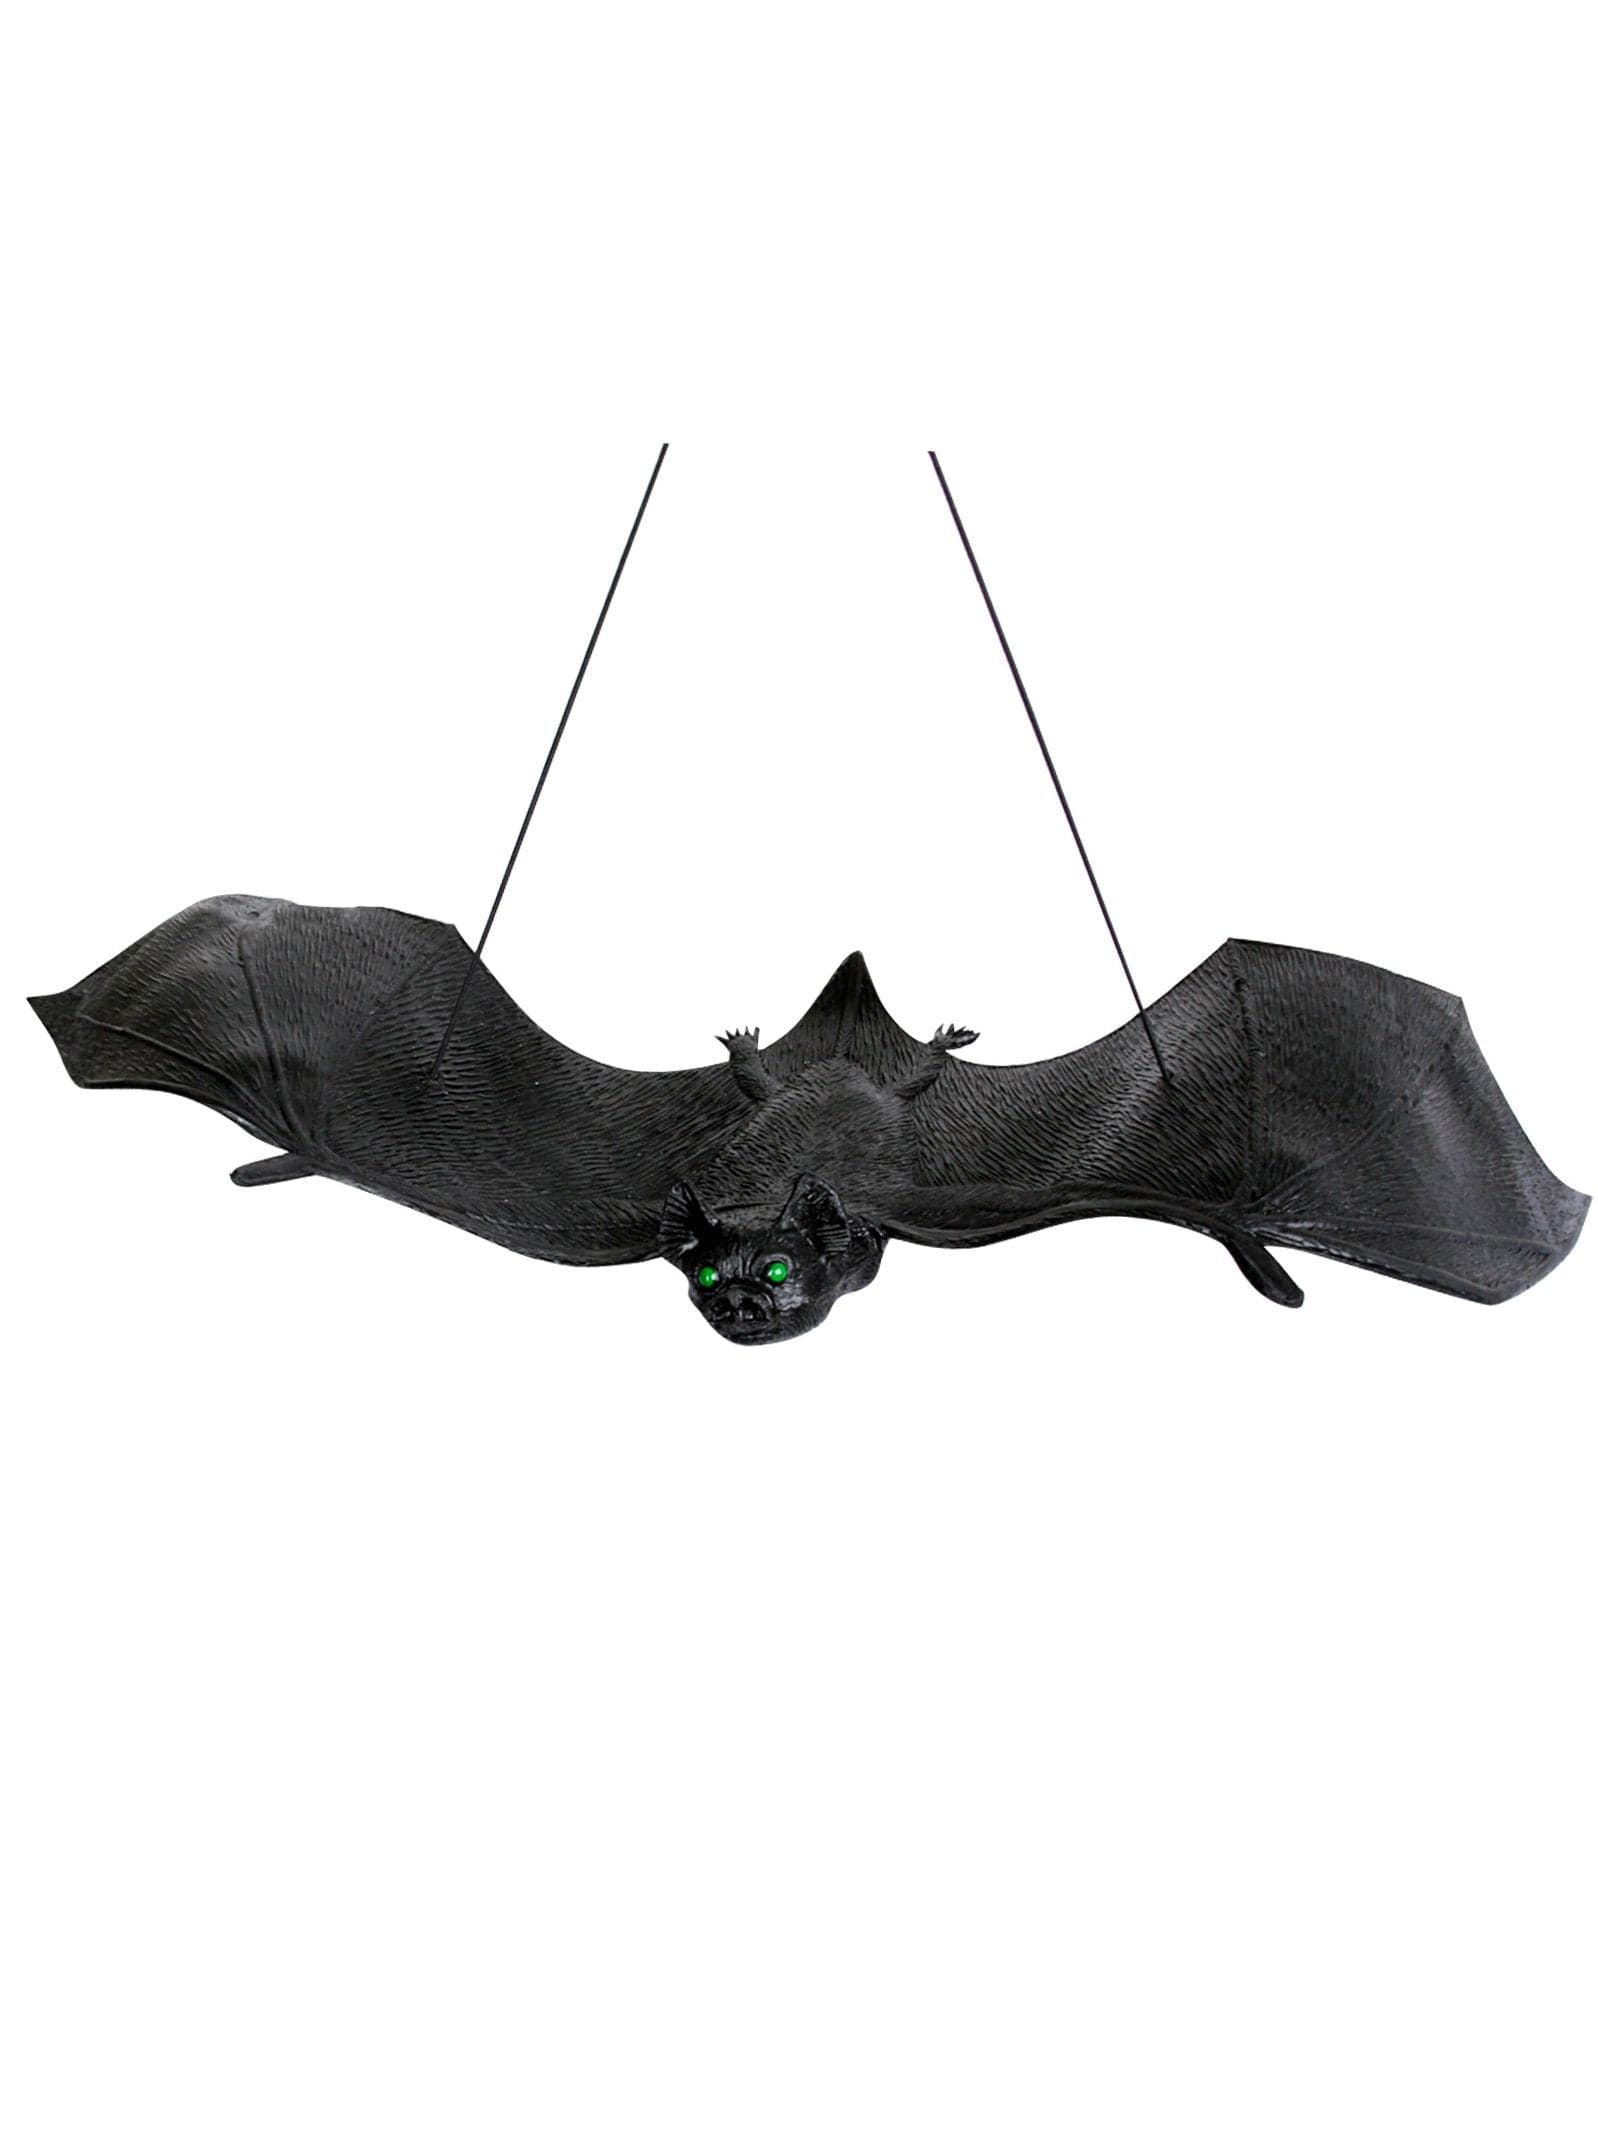 15-inch Black Bat Hanging Decoration - costumes.com